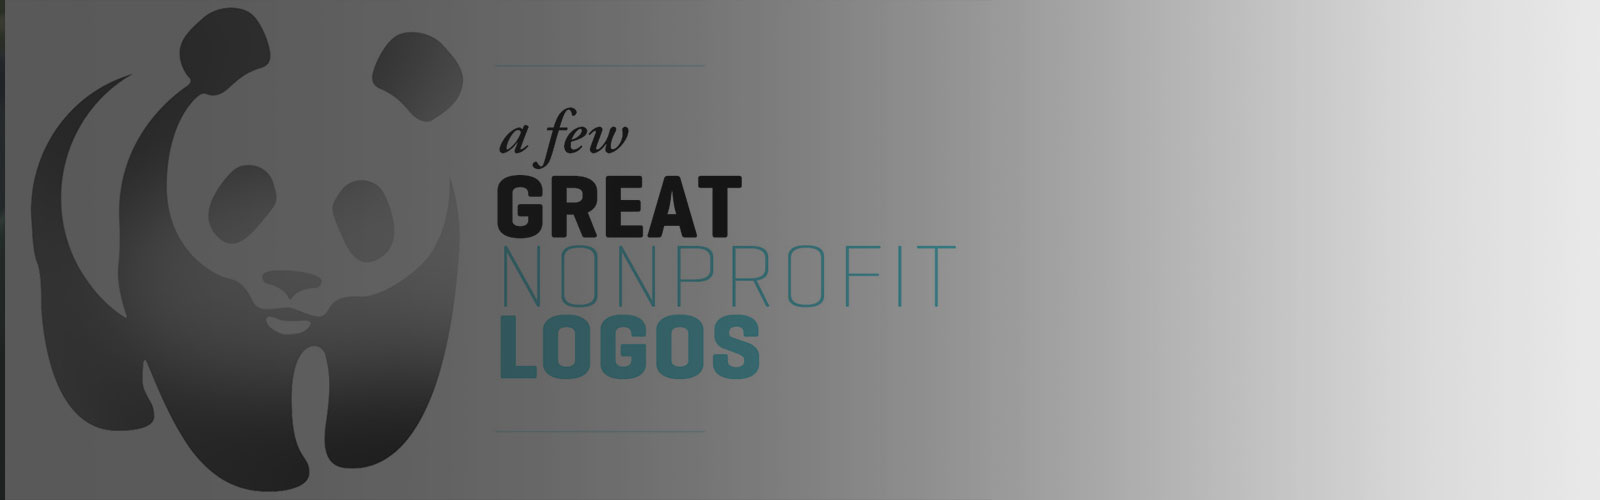 6 Great Nonprofit Logos - Nonprofit Websites & Fundraising